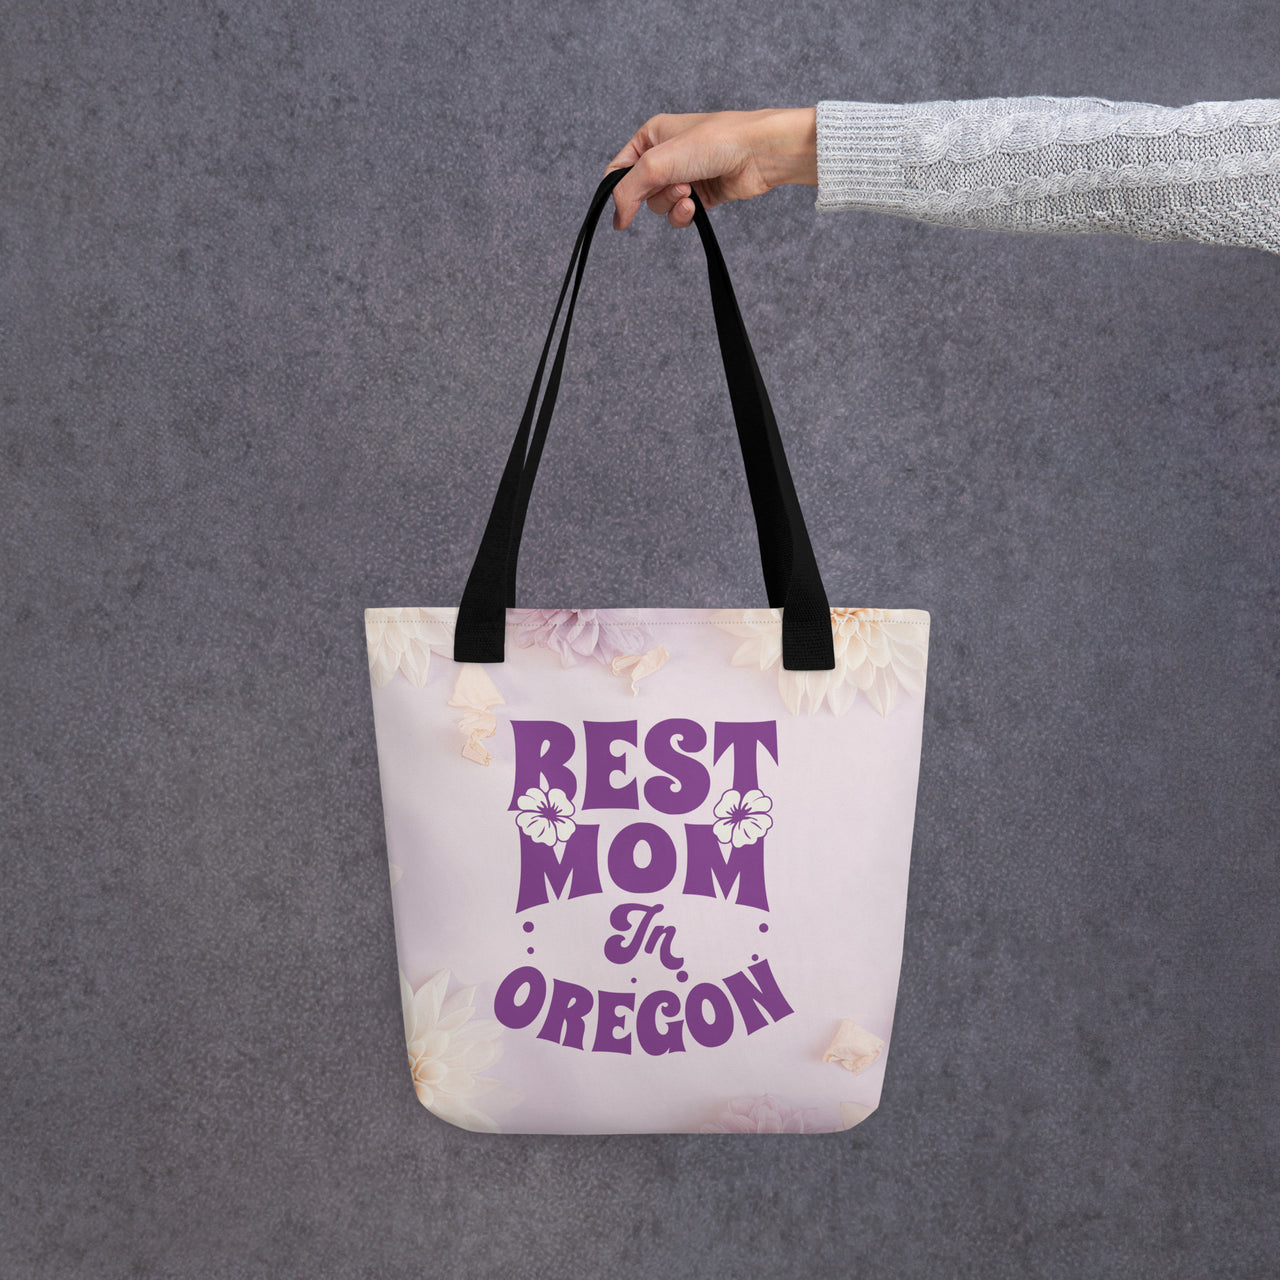 Best Mom in Oregon/3 - Tote bag